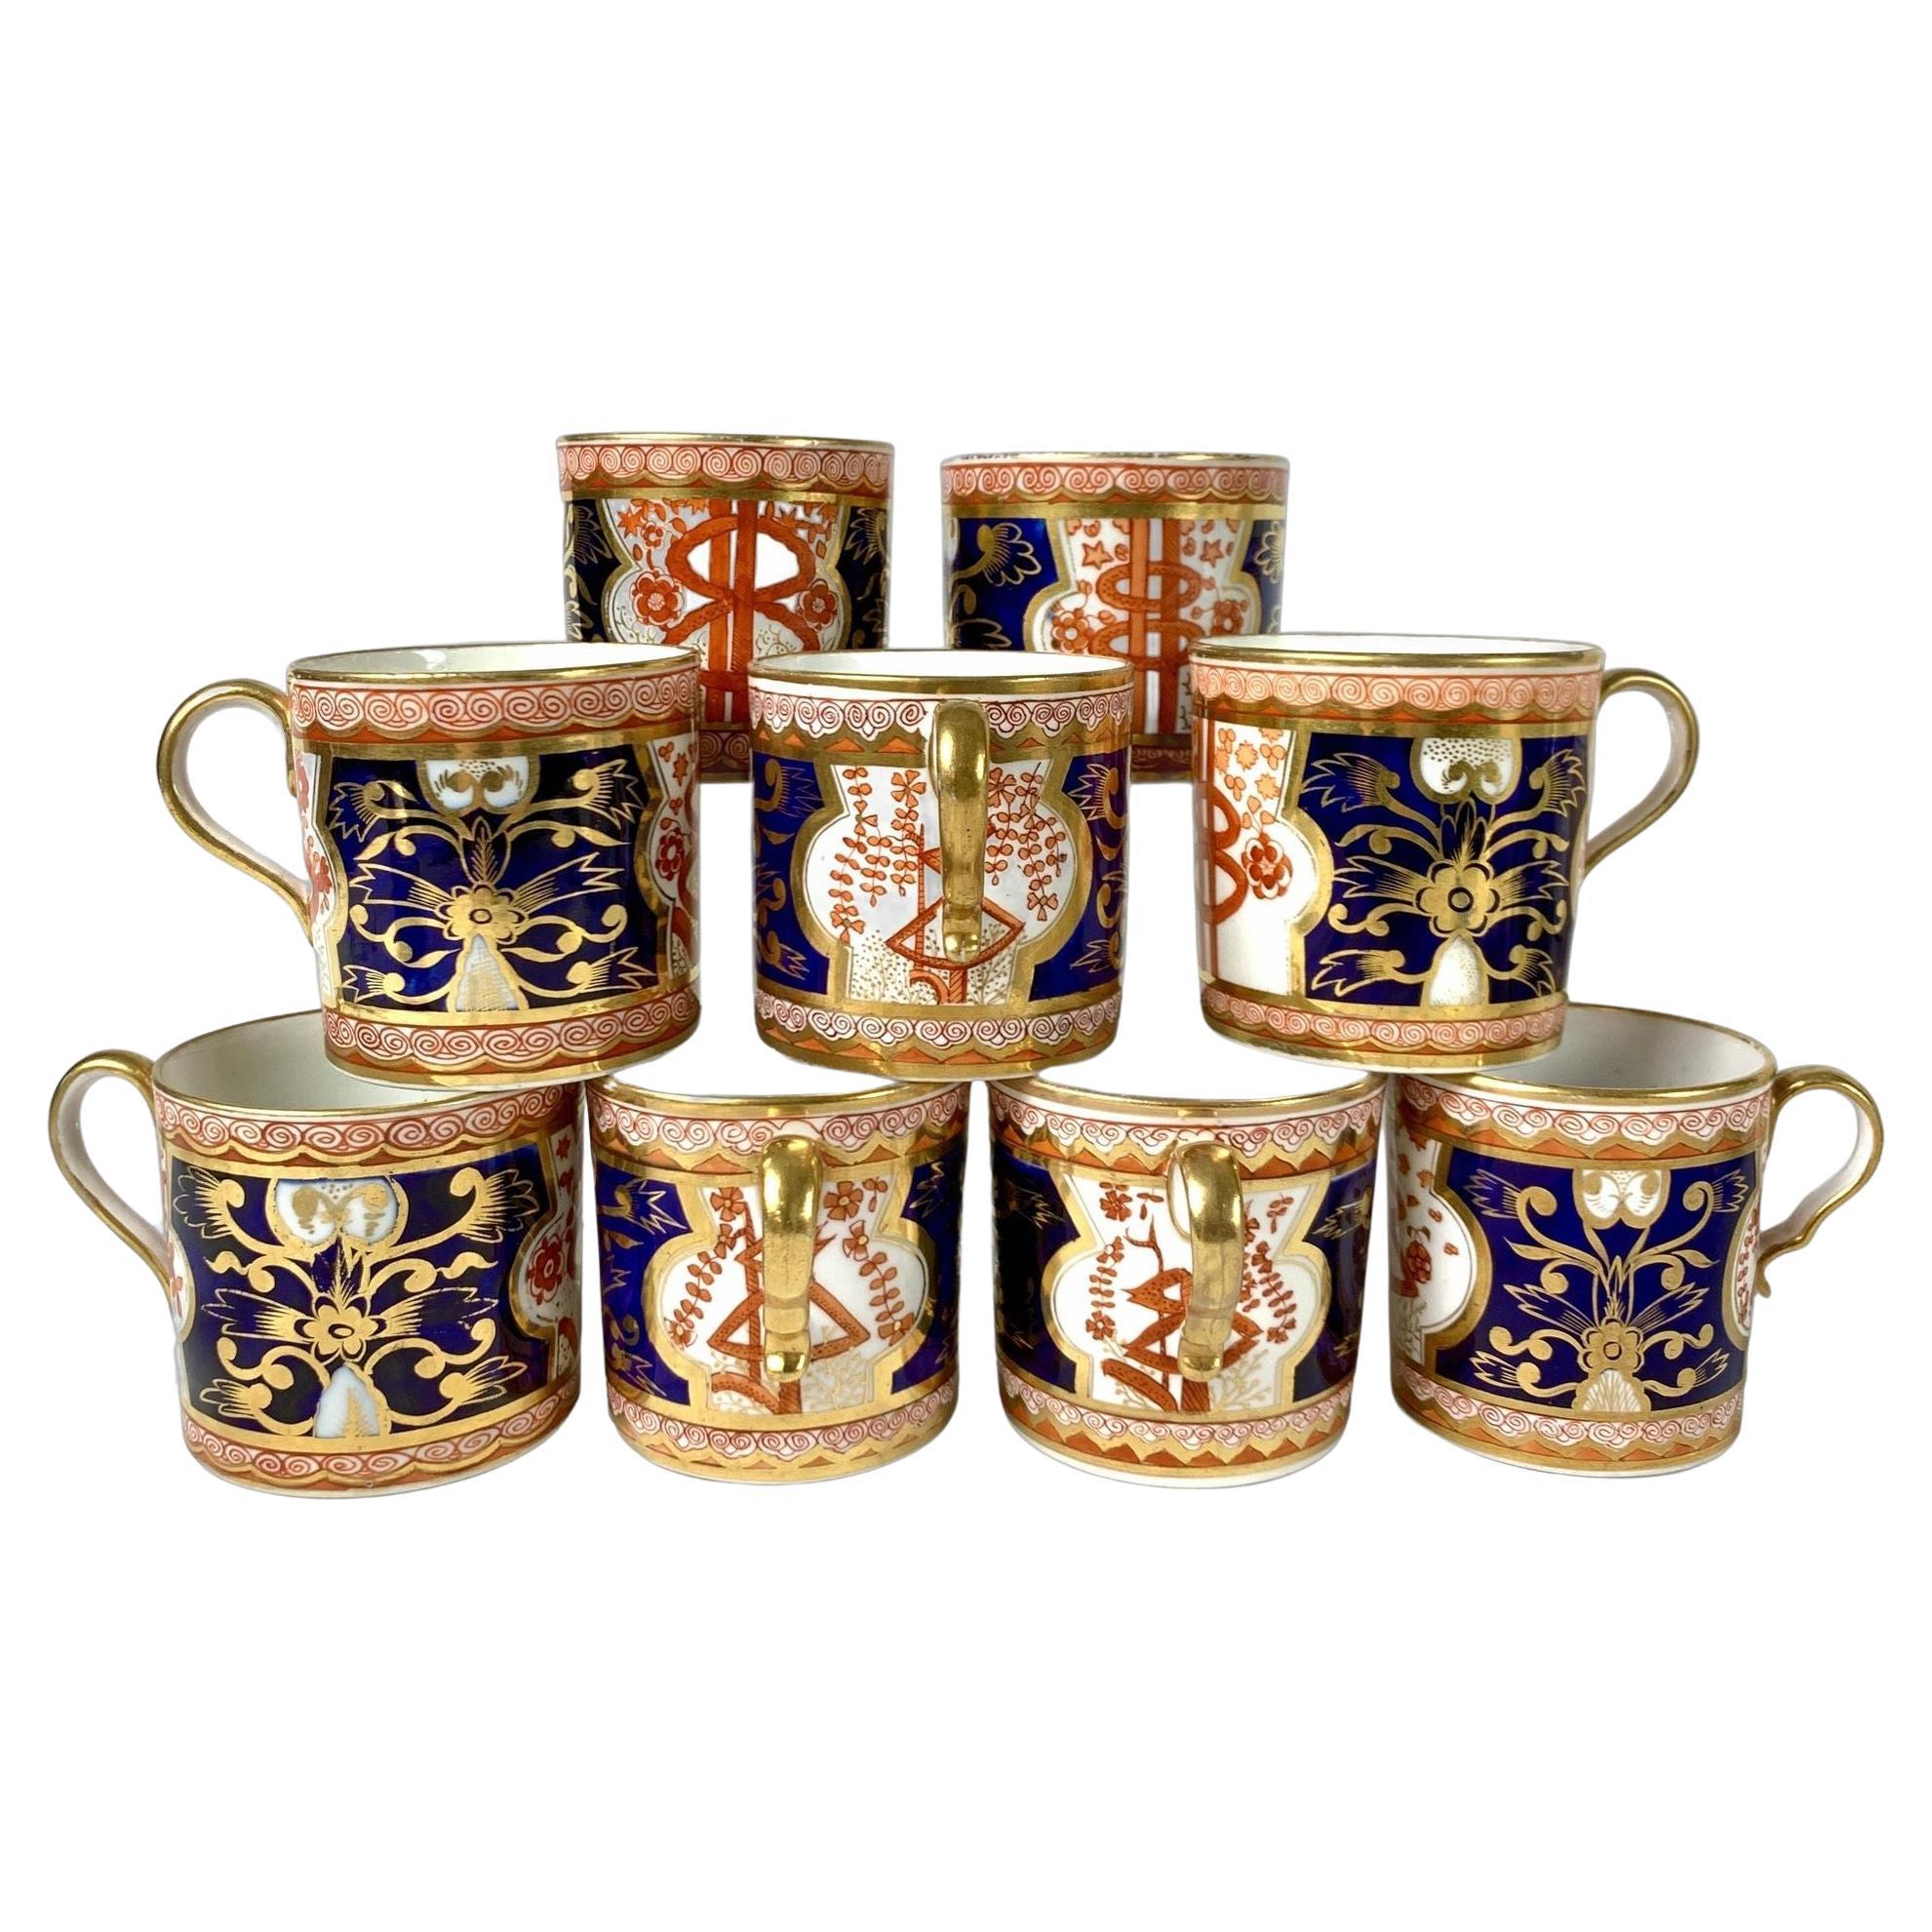 Neuf tasses à café anciennes Spode Dollar Pattern, Angleterre, vers 1820